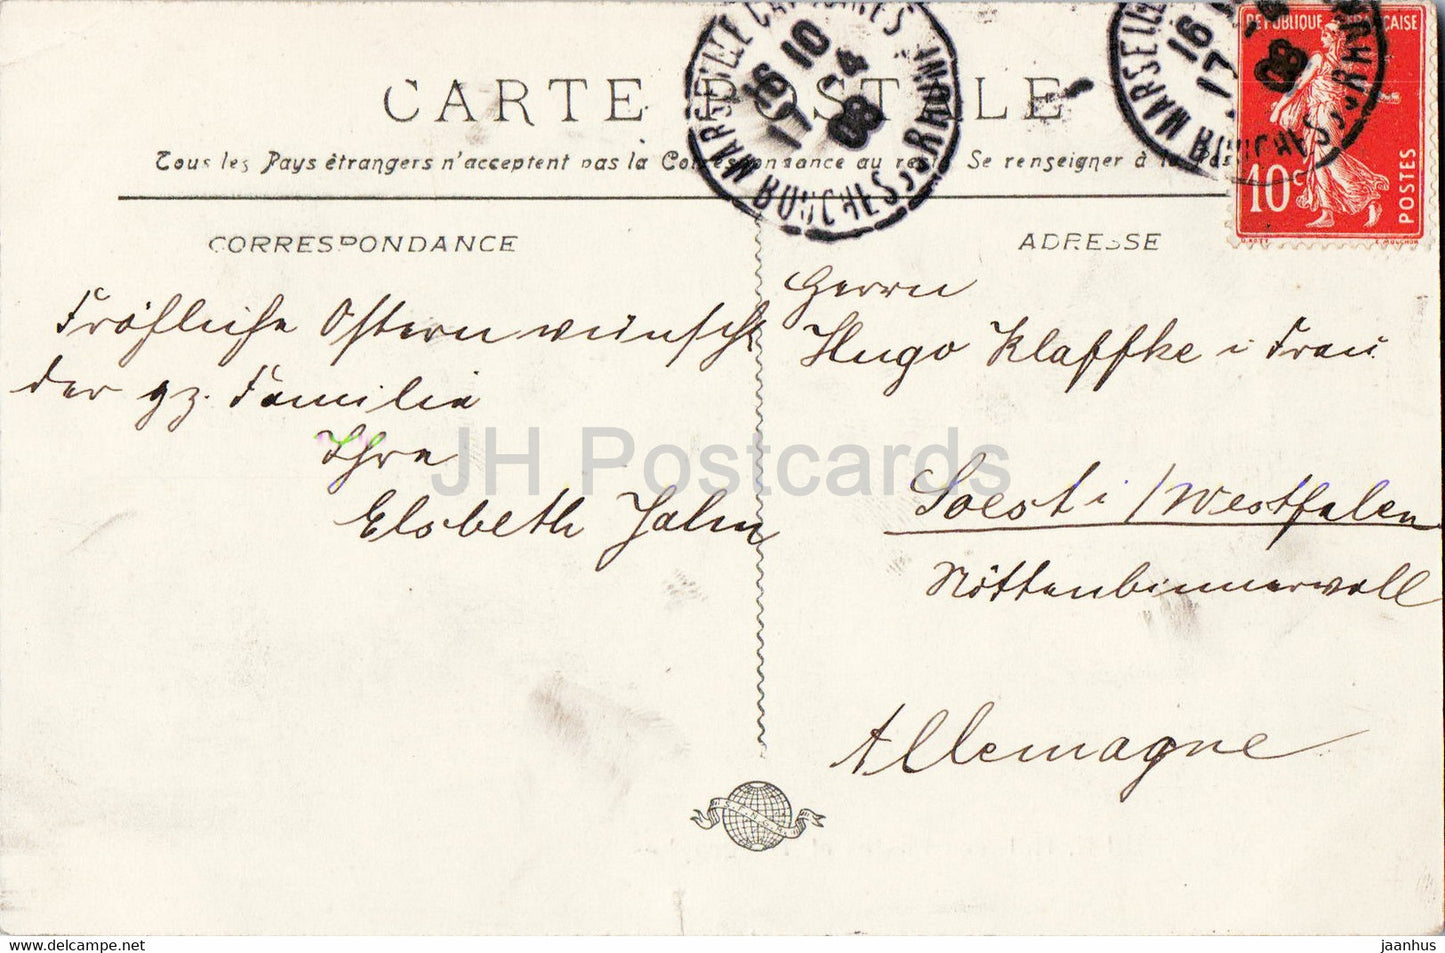 Marseille - Hot des Postes et Telegraphes - post office - telegraph - 5 - old postcard - 1908 - France - used